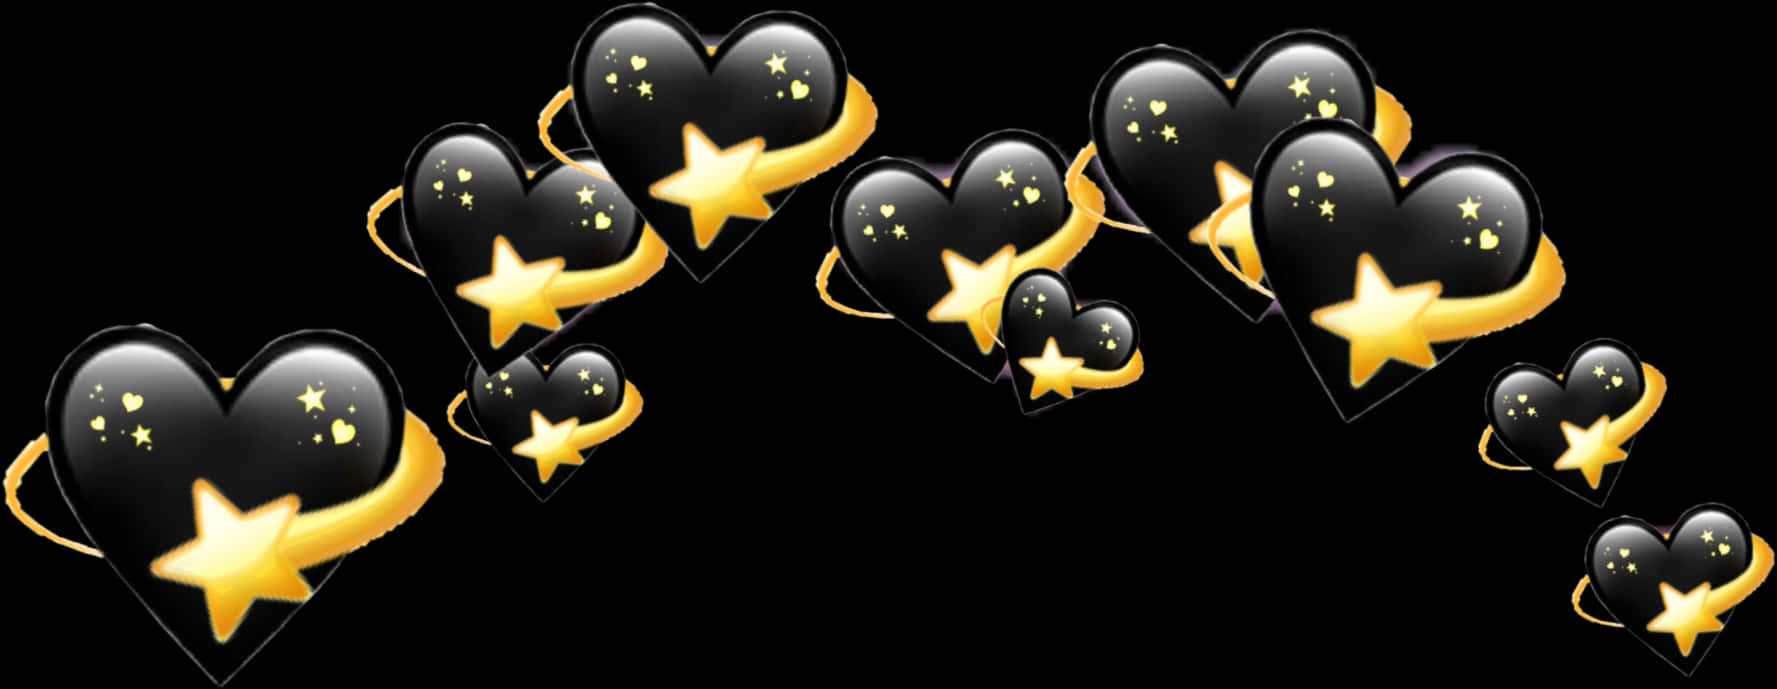 Starry Heartsand Swirls PNG image